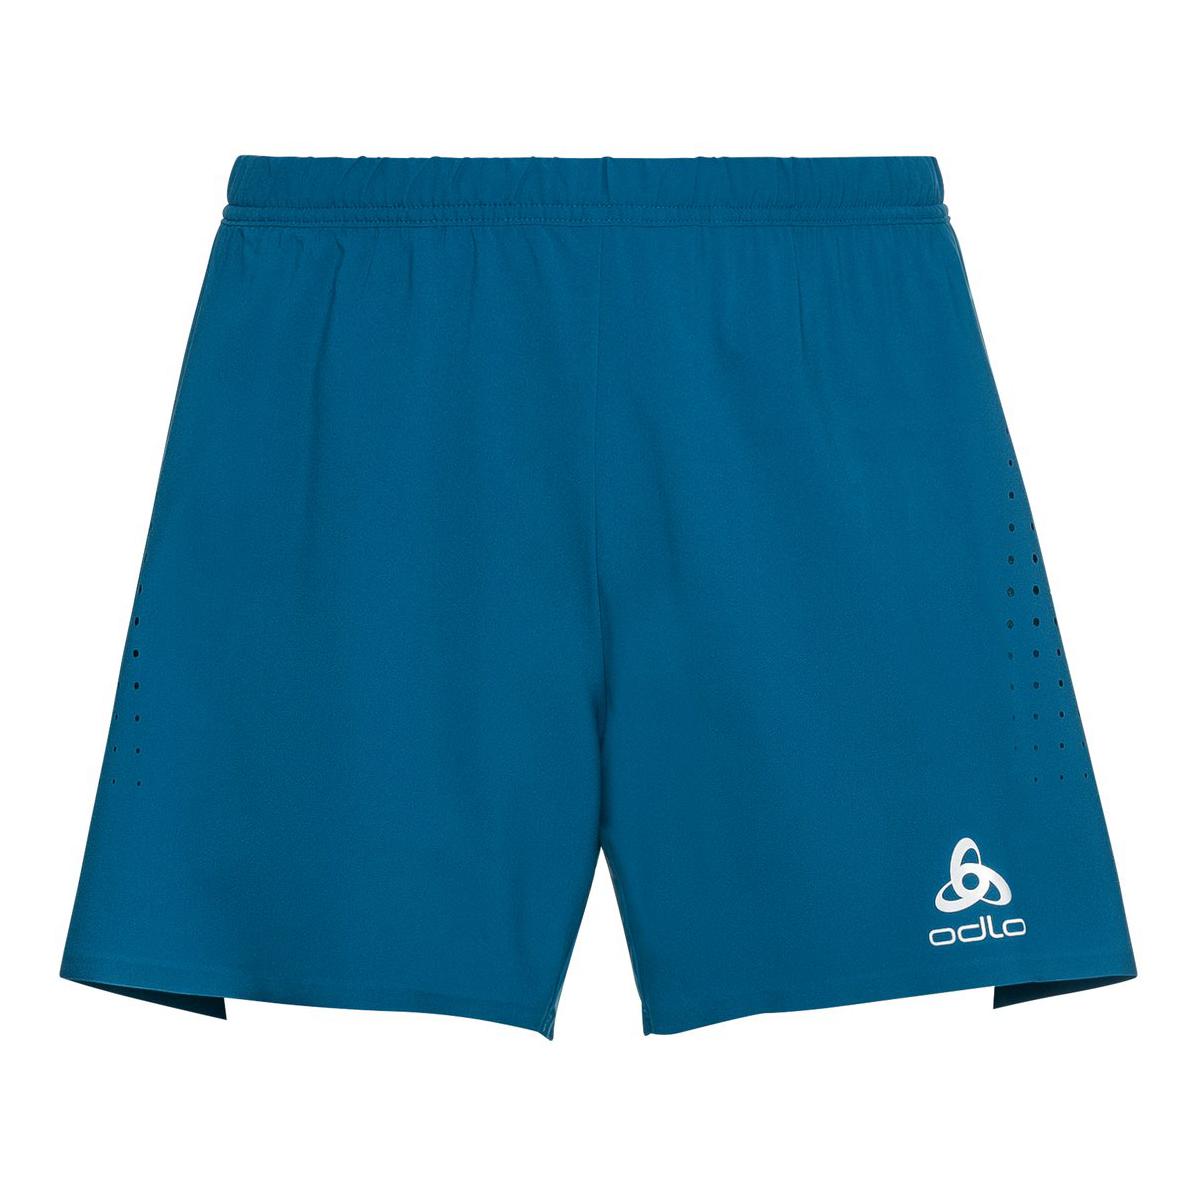 Odlo Zeroweight 5 Inches 2In1 Shorts Bleu XL 